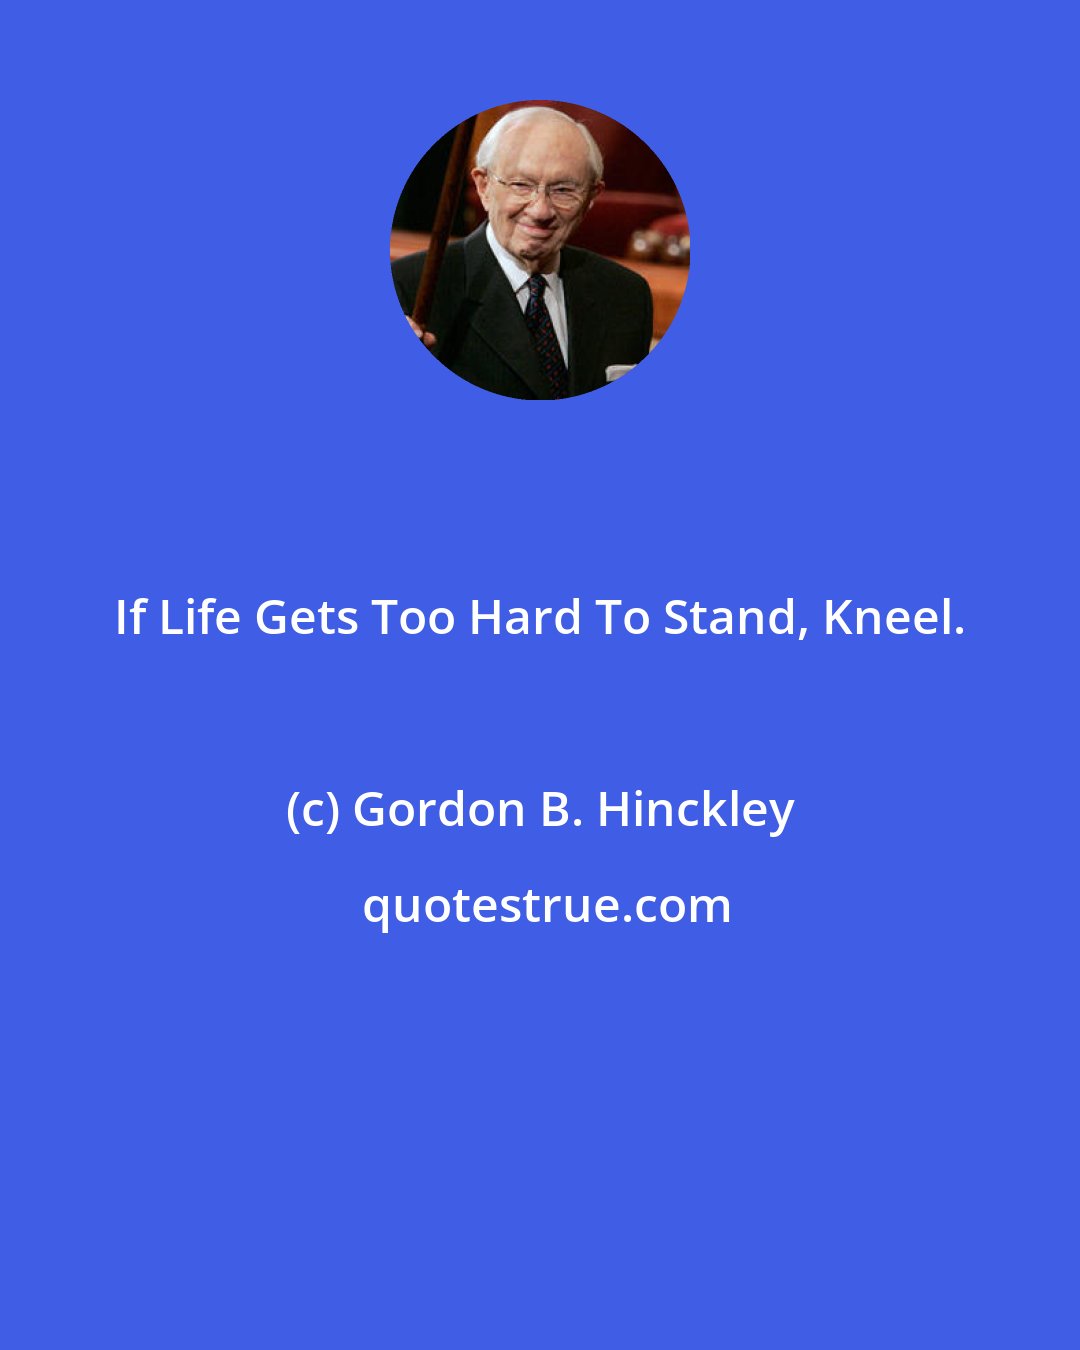 Gordon B. Hinckley: If Life Gets Too Hard To Stand, Kneel.